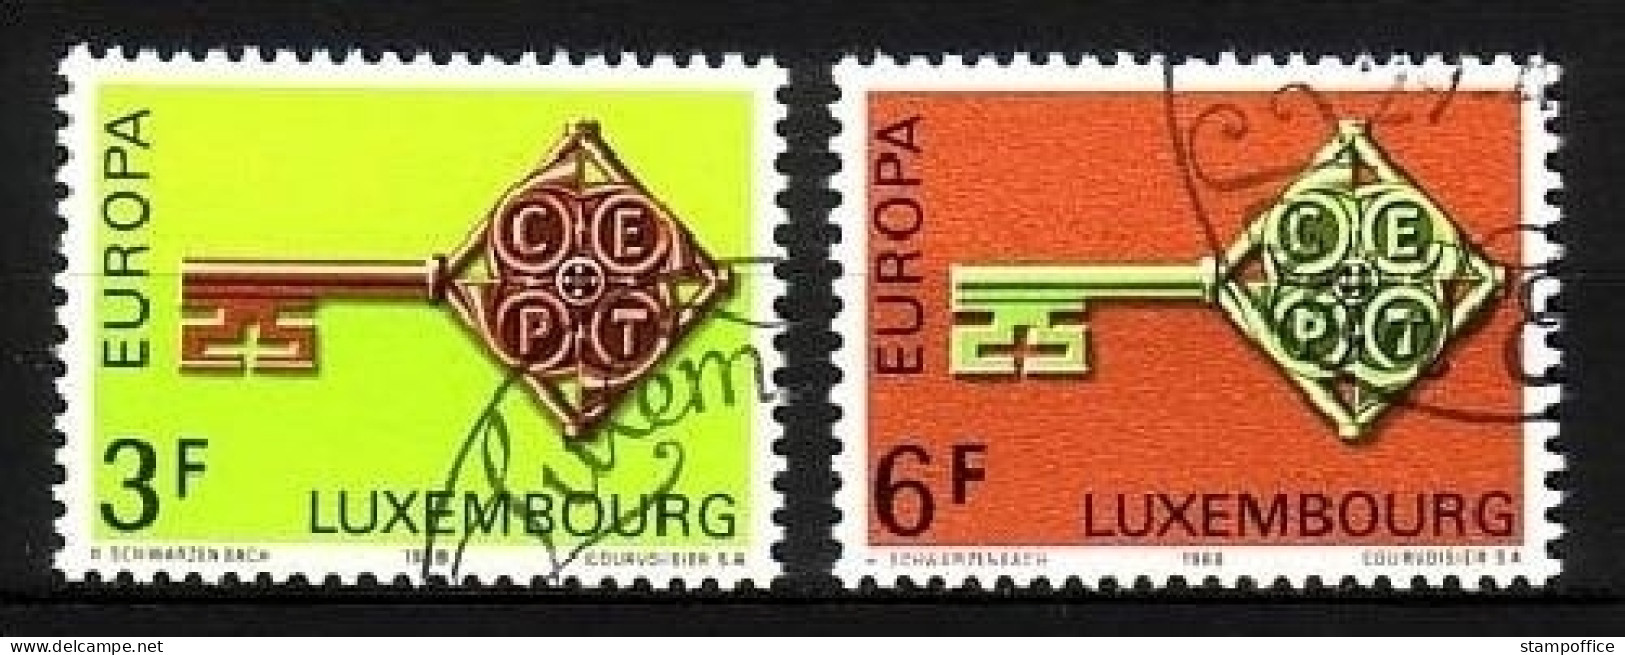 LUXEMBURG MI-NR. 771-772 O EUROPA 1968 - KREUZBARTSCHLÜSSEL - 1968